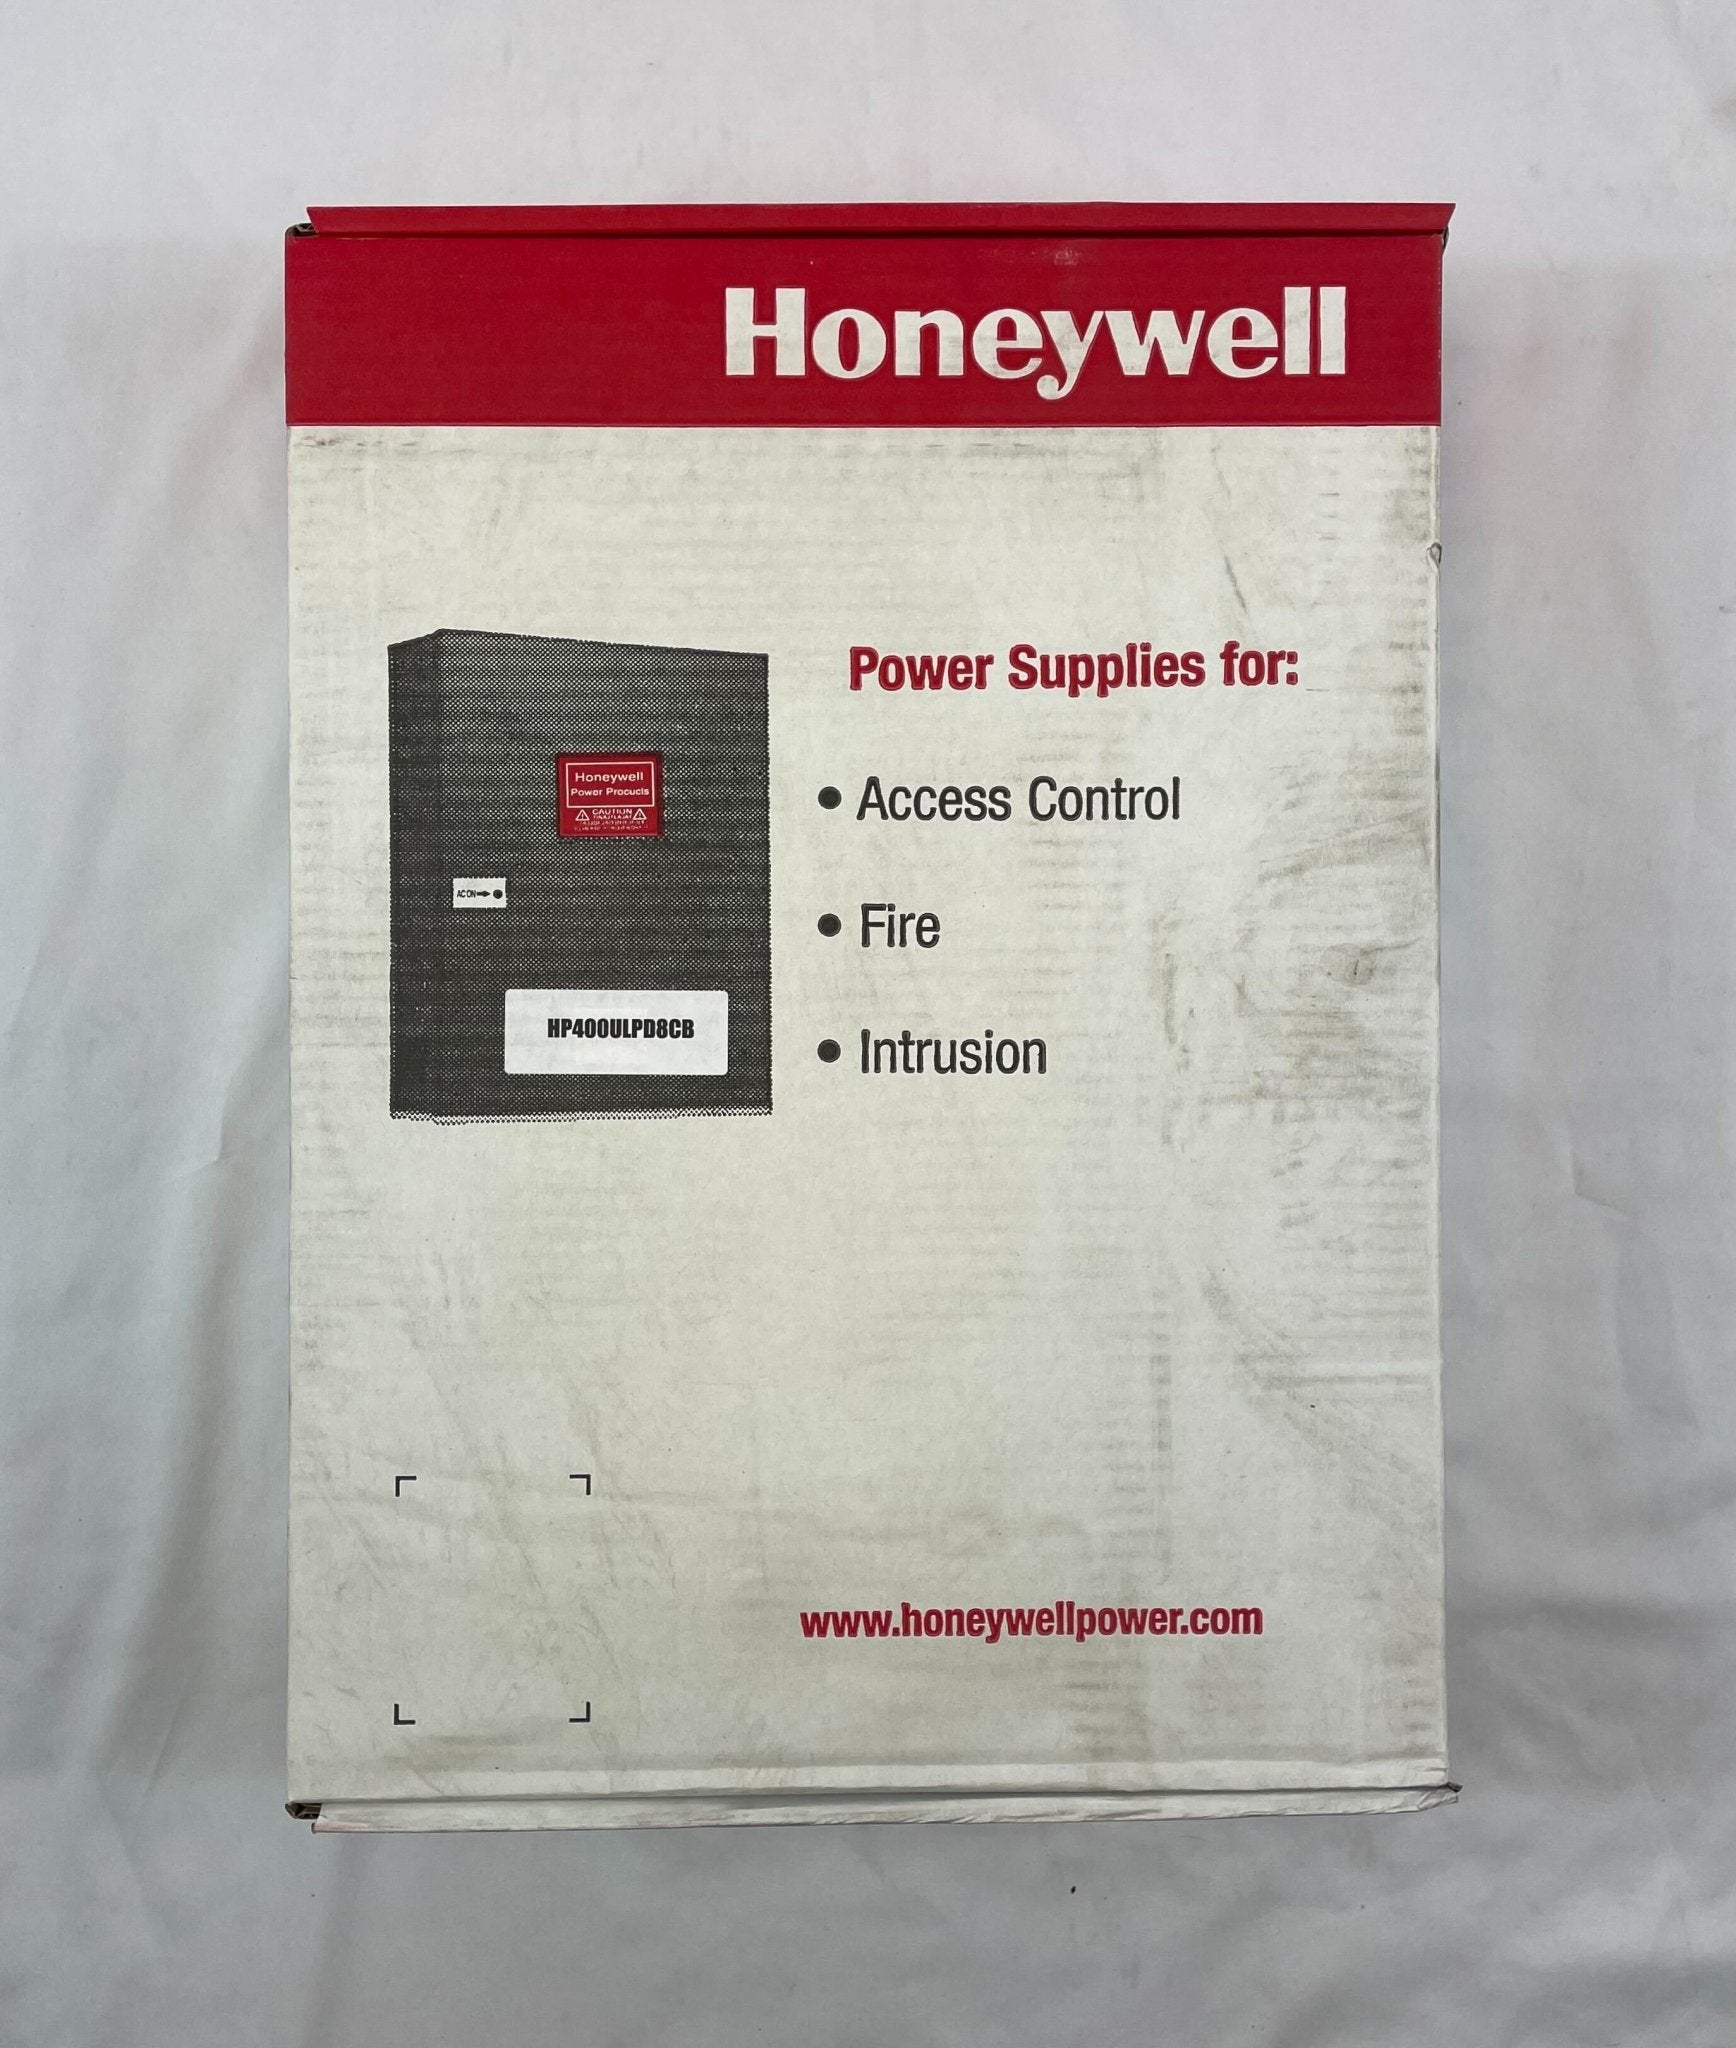 Honeywell HP400ULPD8CB Home Proprietary Power S - The Fire Alarm Supplier